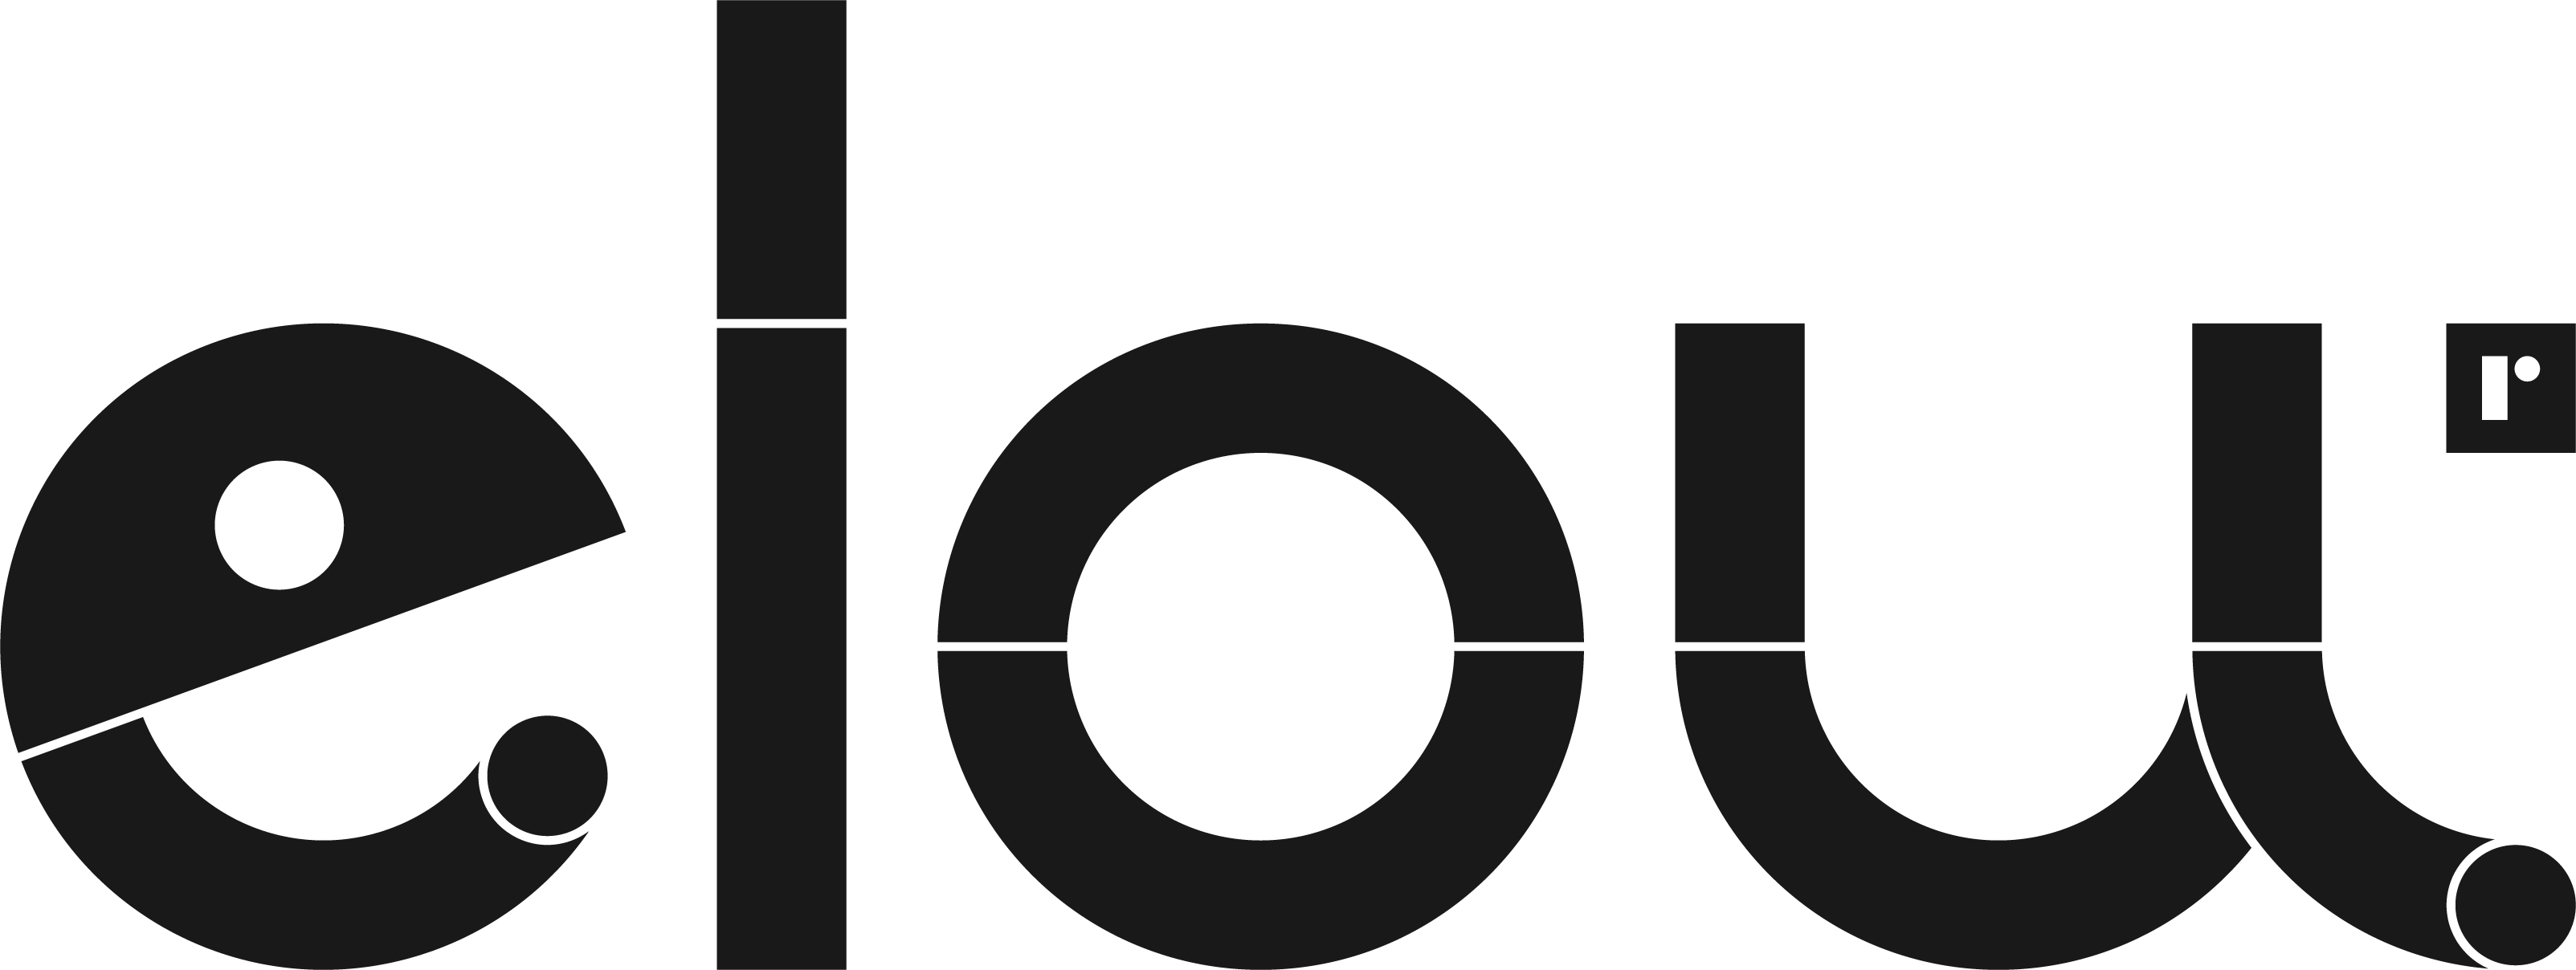 Elou Logo